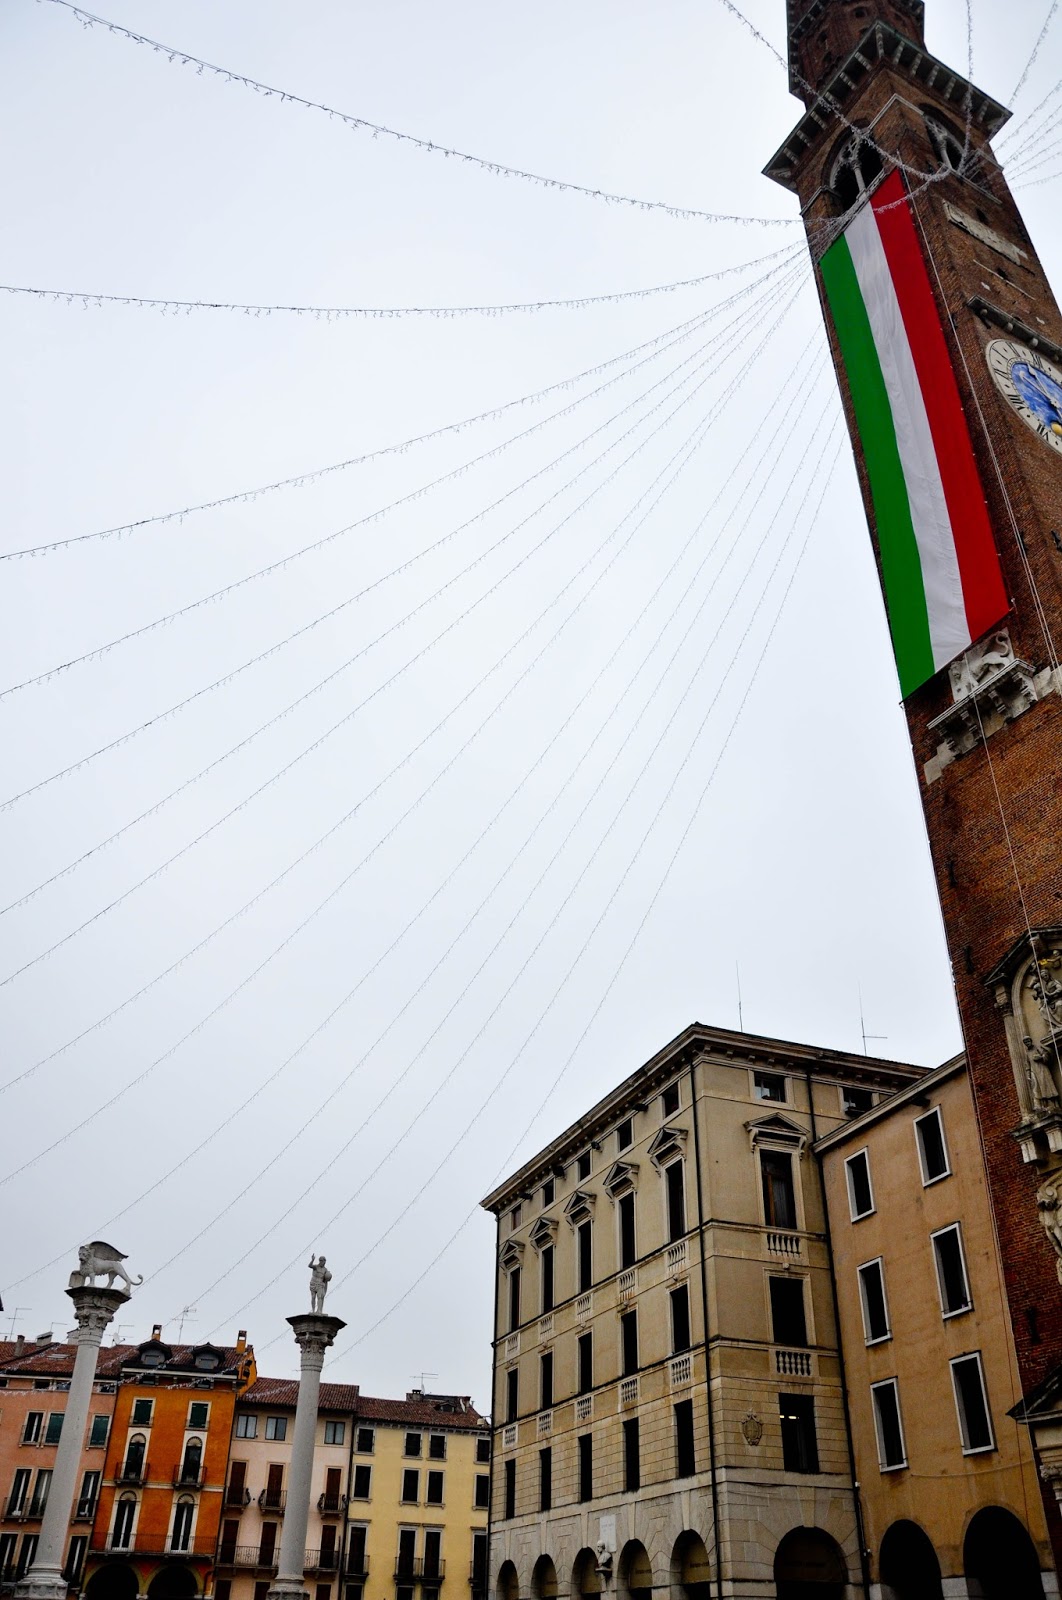 Piazza dei Signori with the Italian flag, Saint Barbara celebration, Vicenza, Veneto, Italy